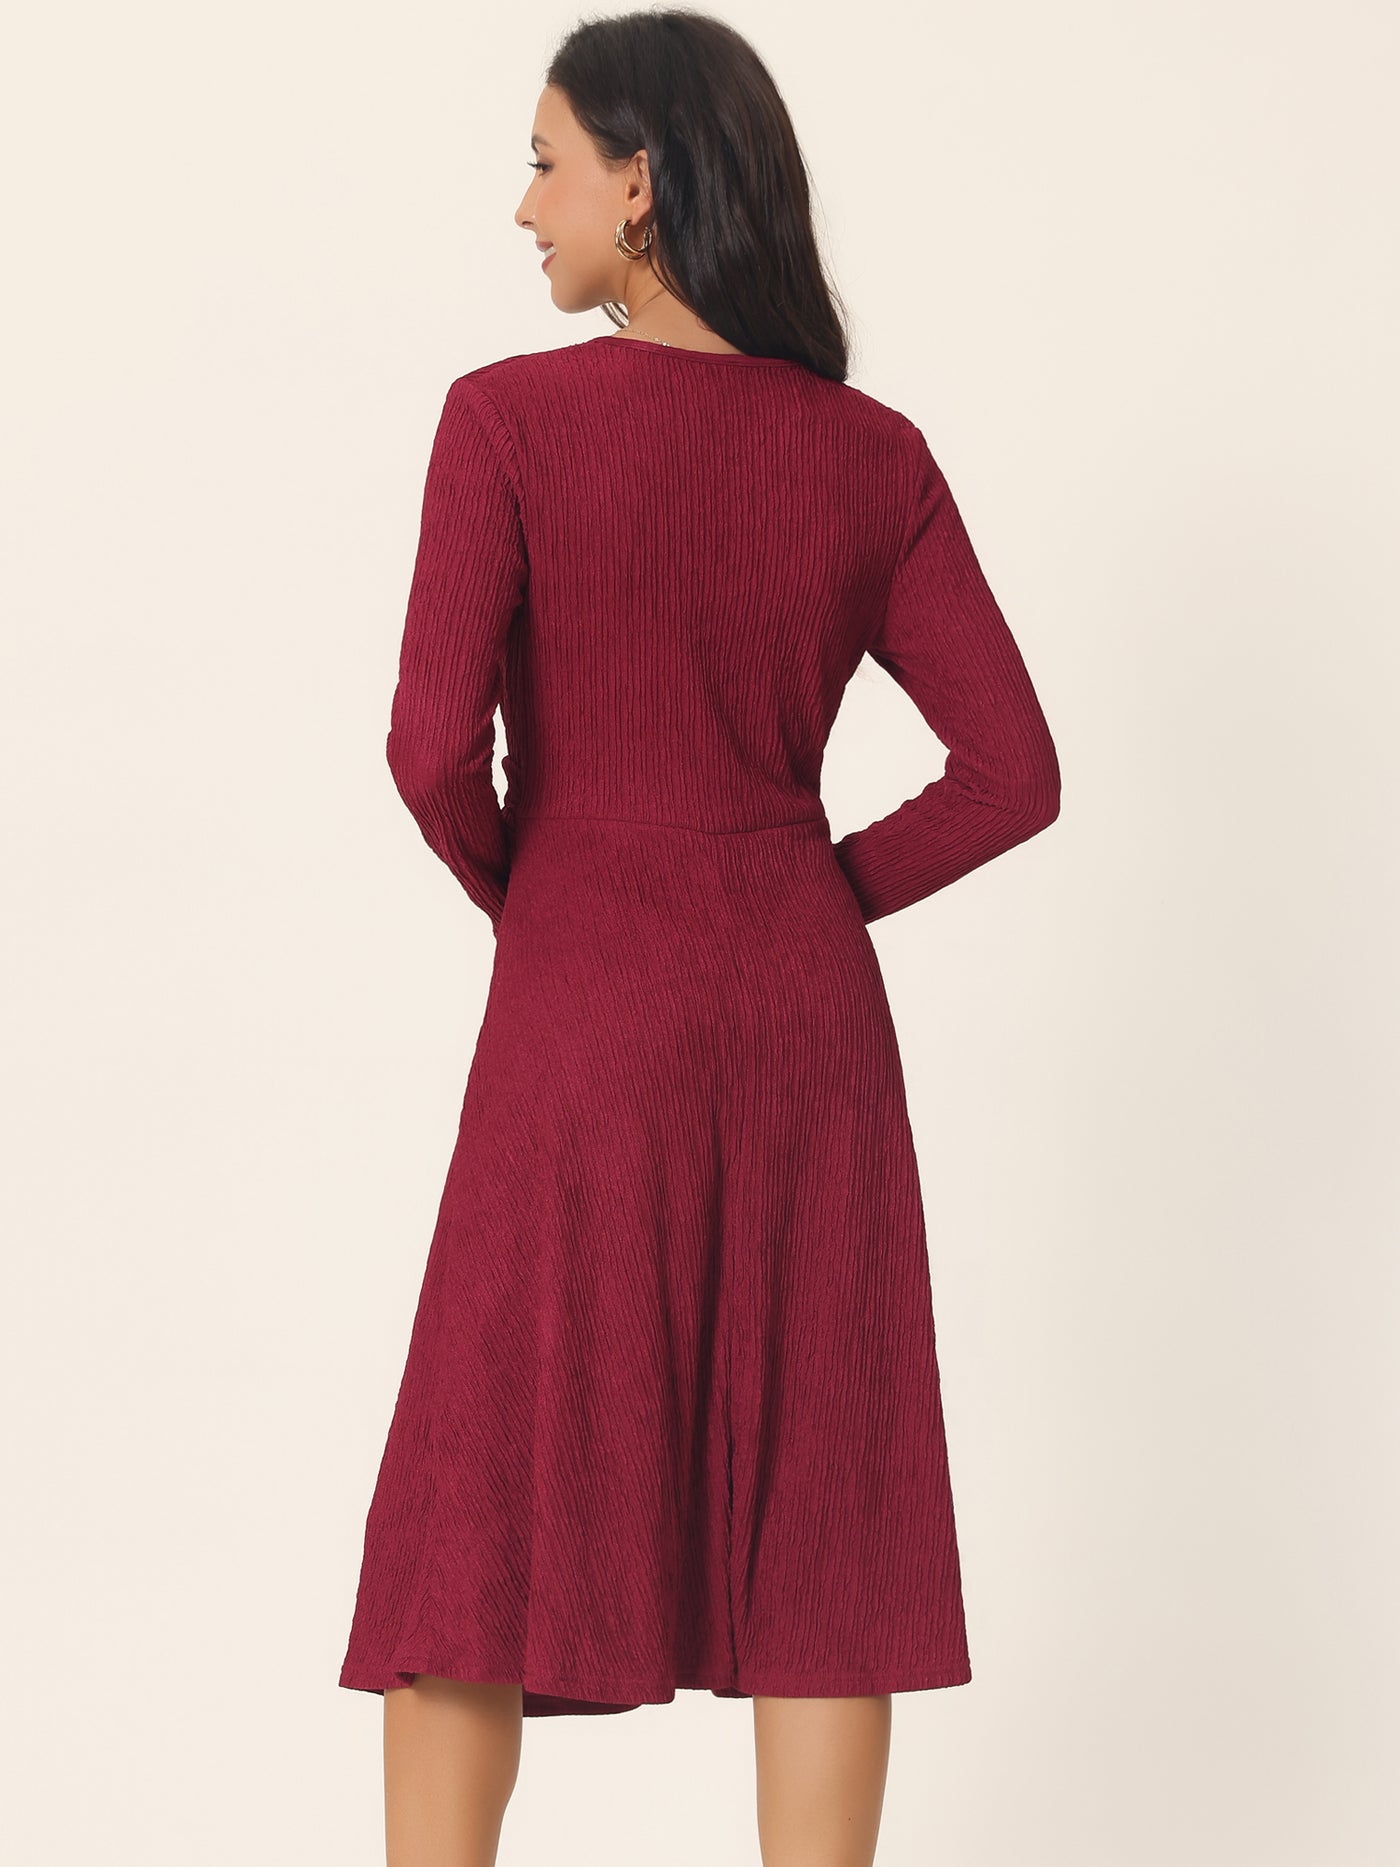 Bublédon Women's Long Sleeve Criss Cross V Neck Knit Sweater Midi Dress